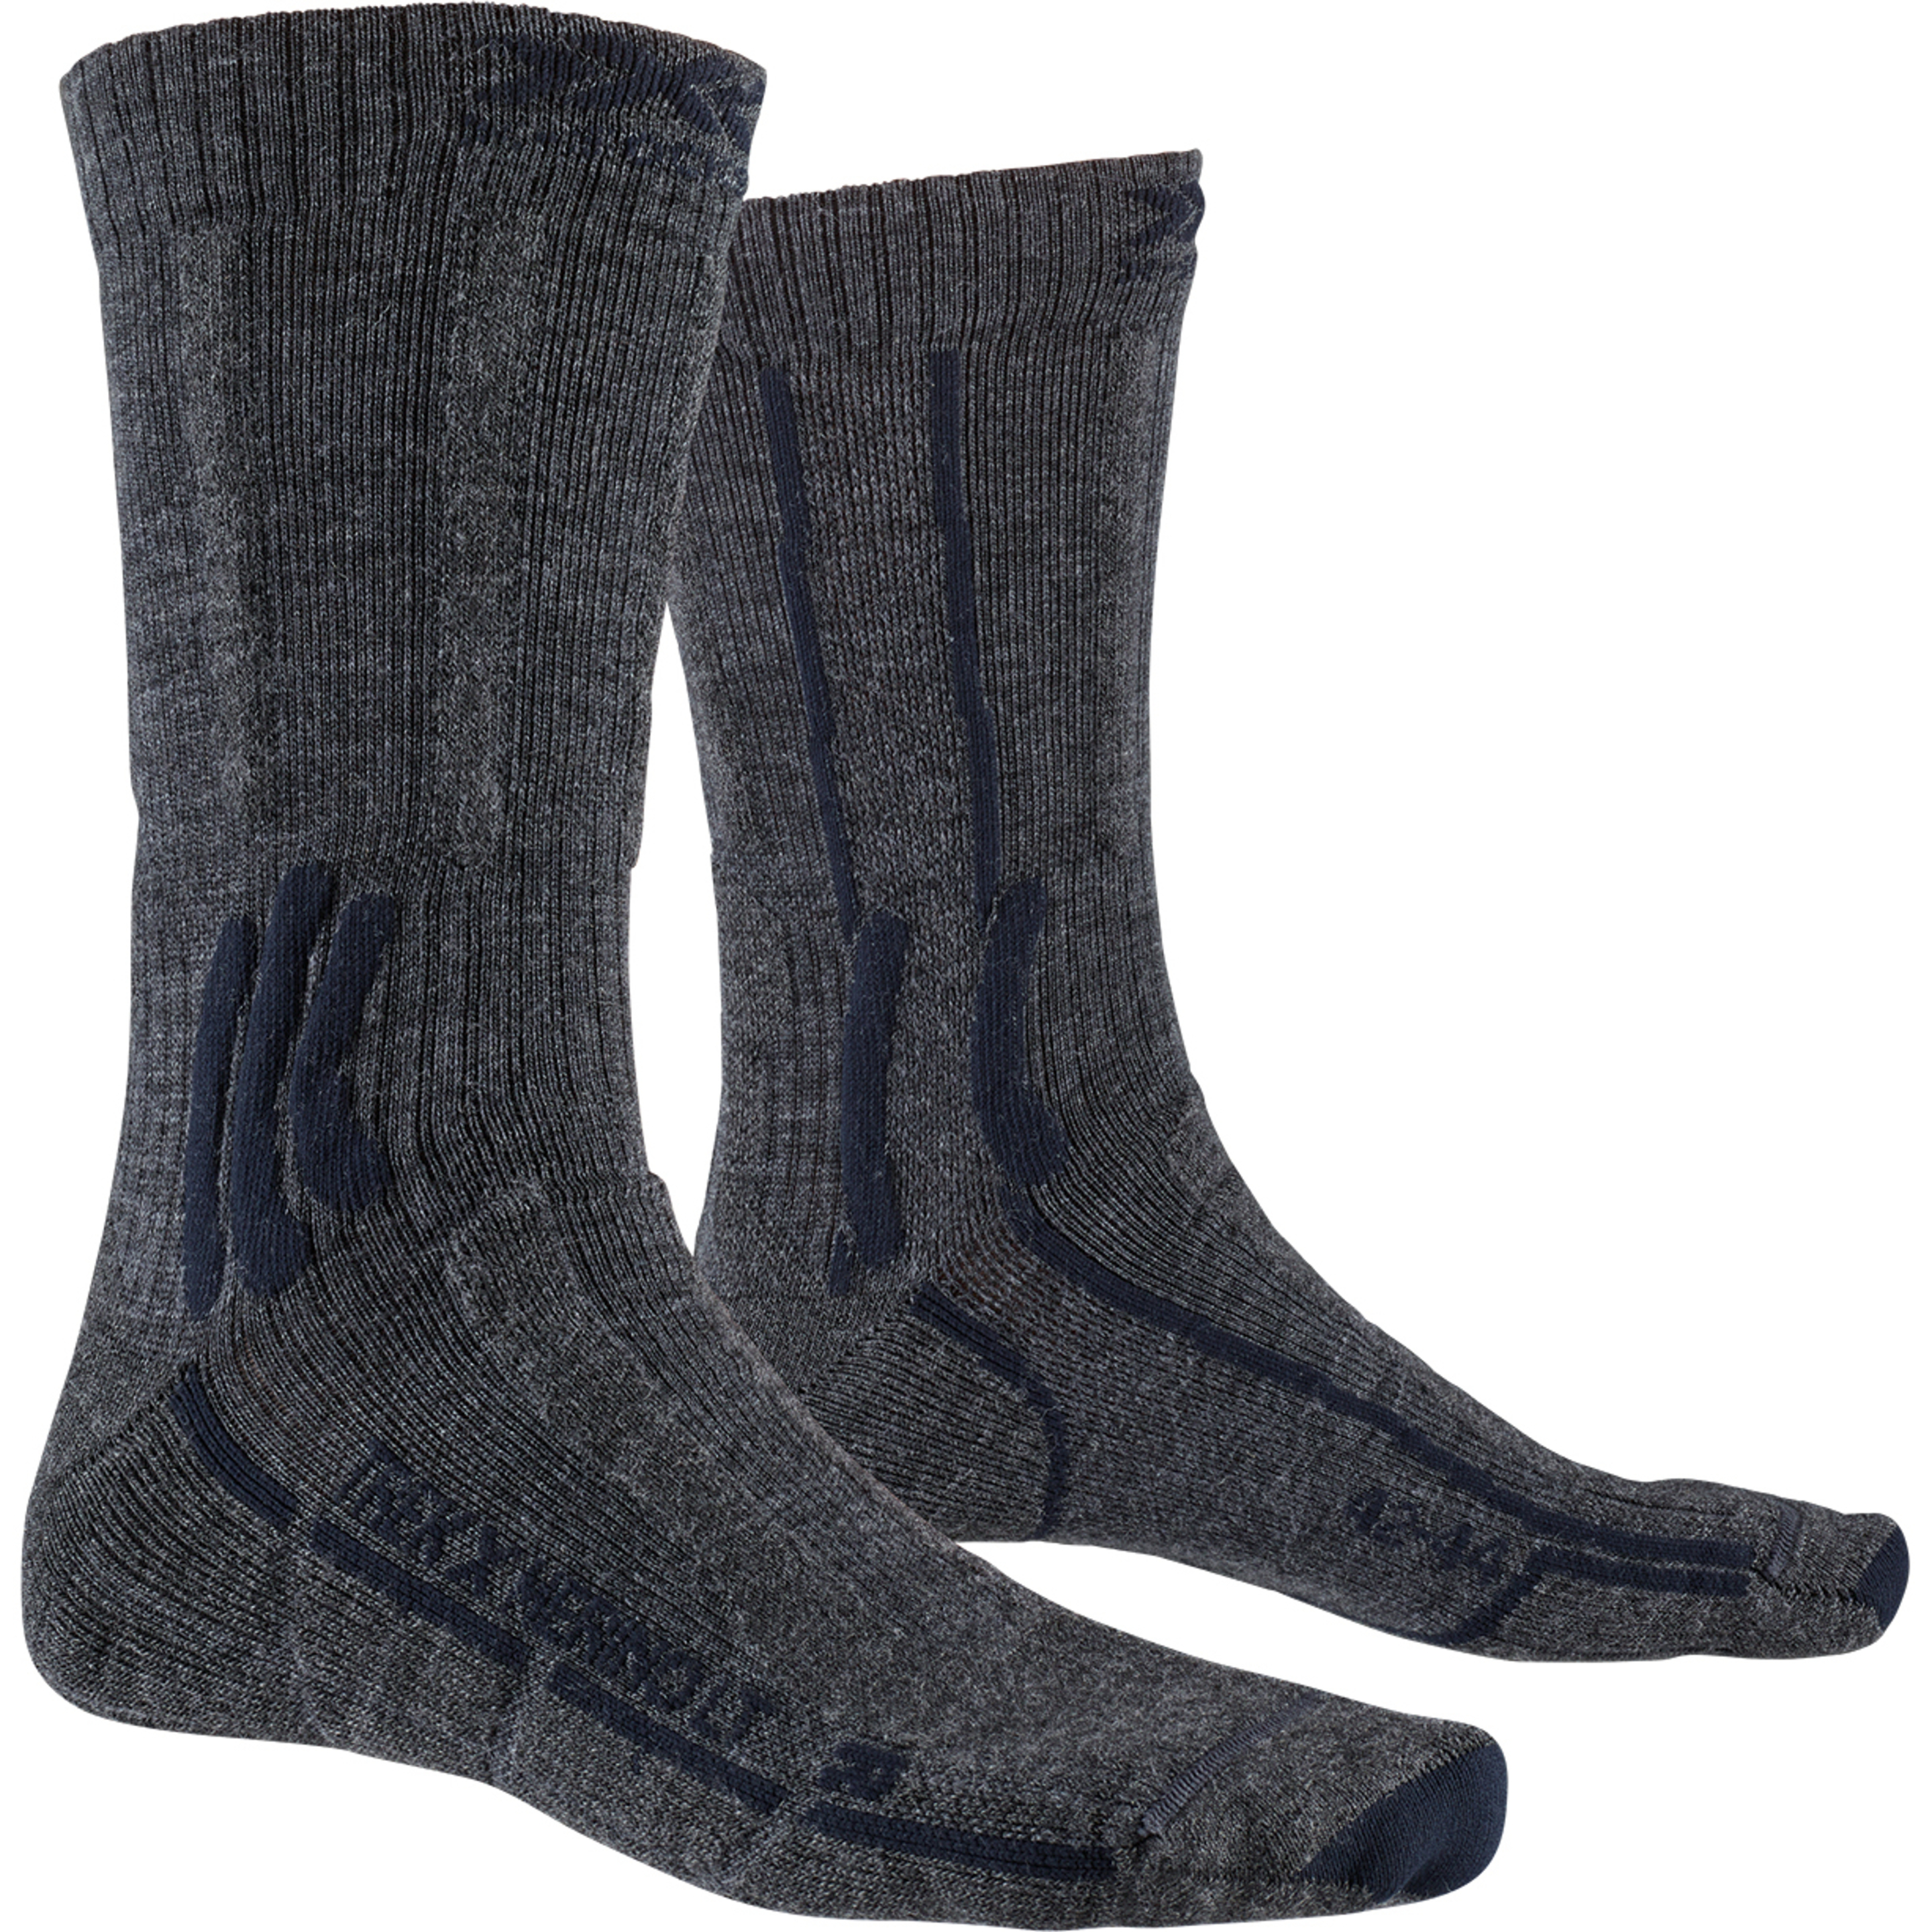 Calcetin Trek X Merino Lt  X-socks - gris - 